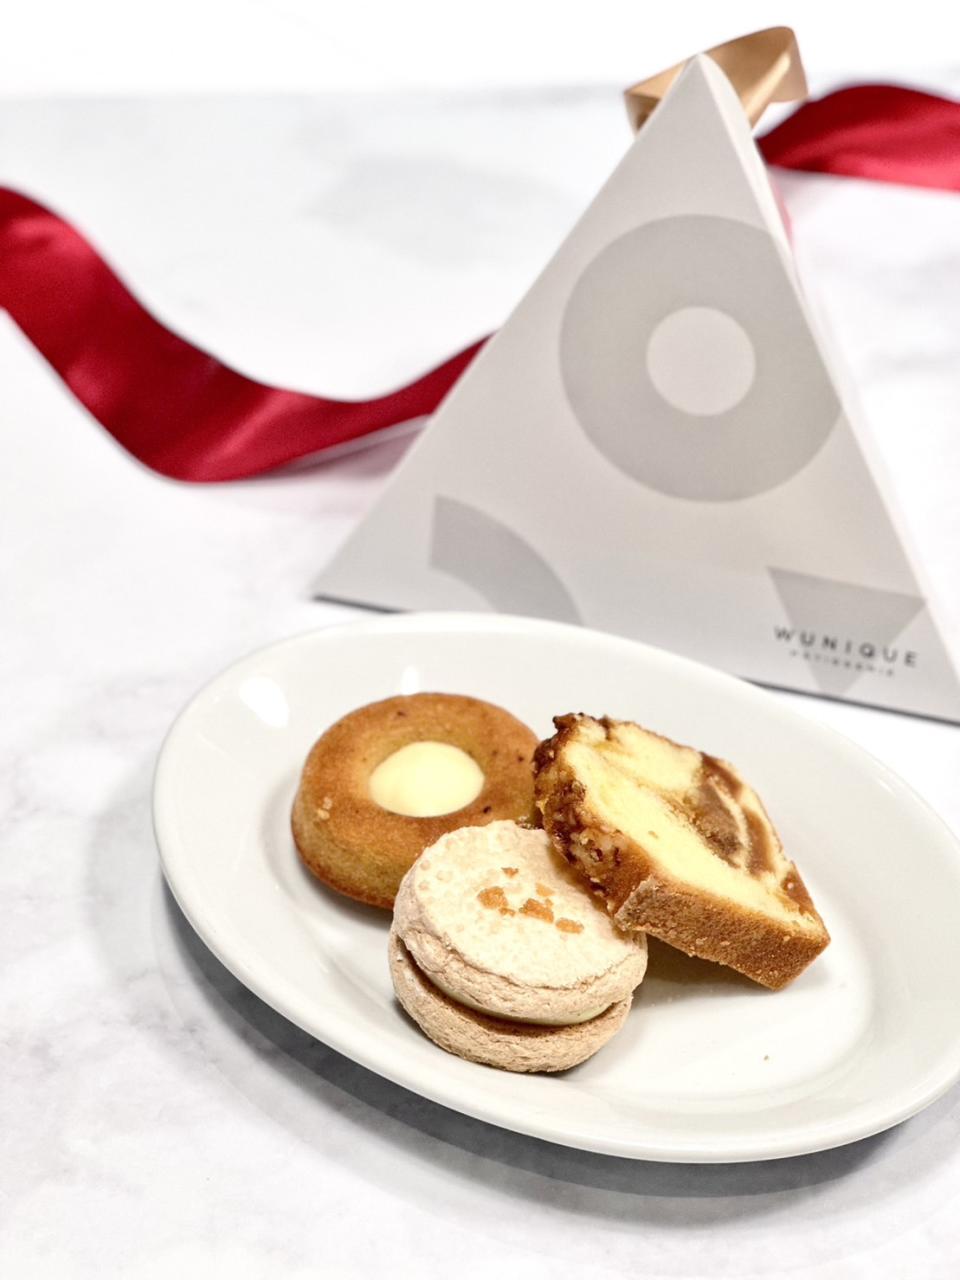 「WUnique Pâtisserie」聯名甜點禮盒中包含「肉桂蘋果磅蛋糕」、「起司雙重奏費南雪」及「香蕉派達克瓦茲」3款甜點。